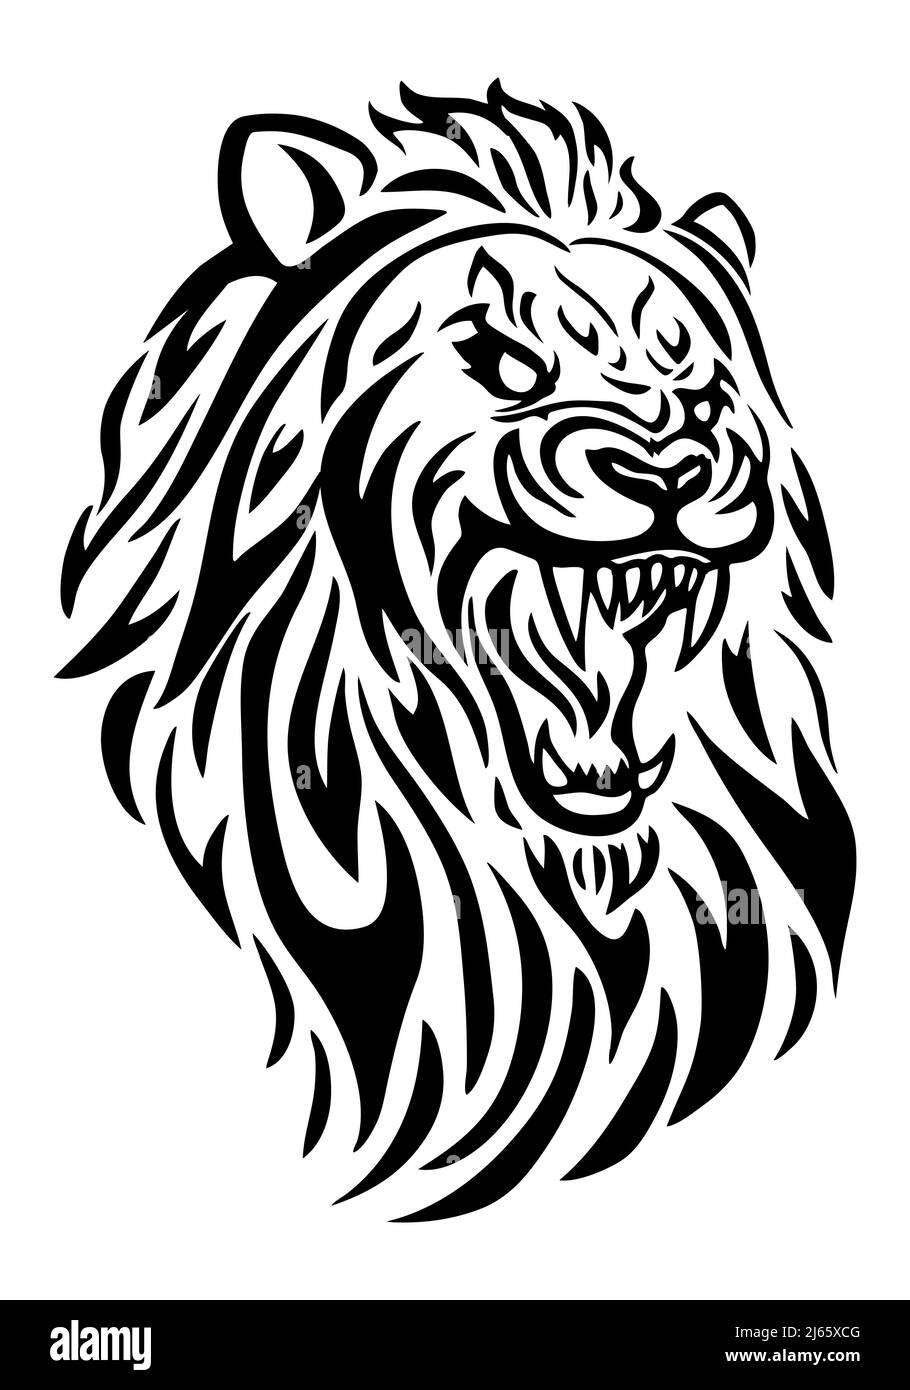 illustration of a furious lion head tattoo Stock Photo